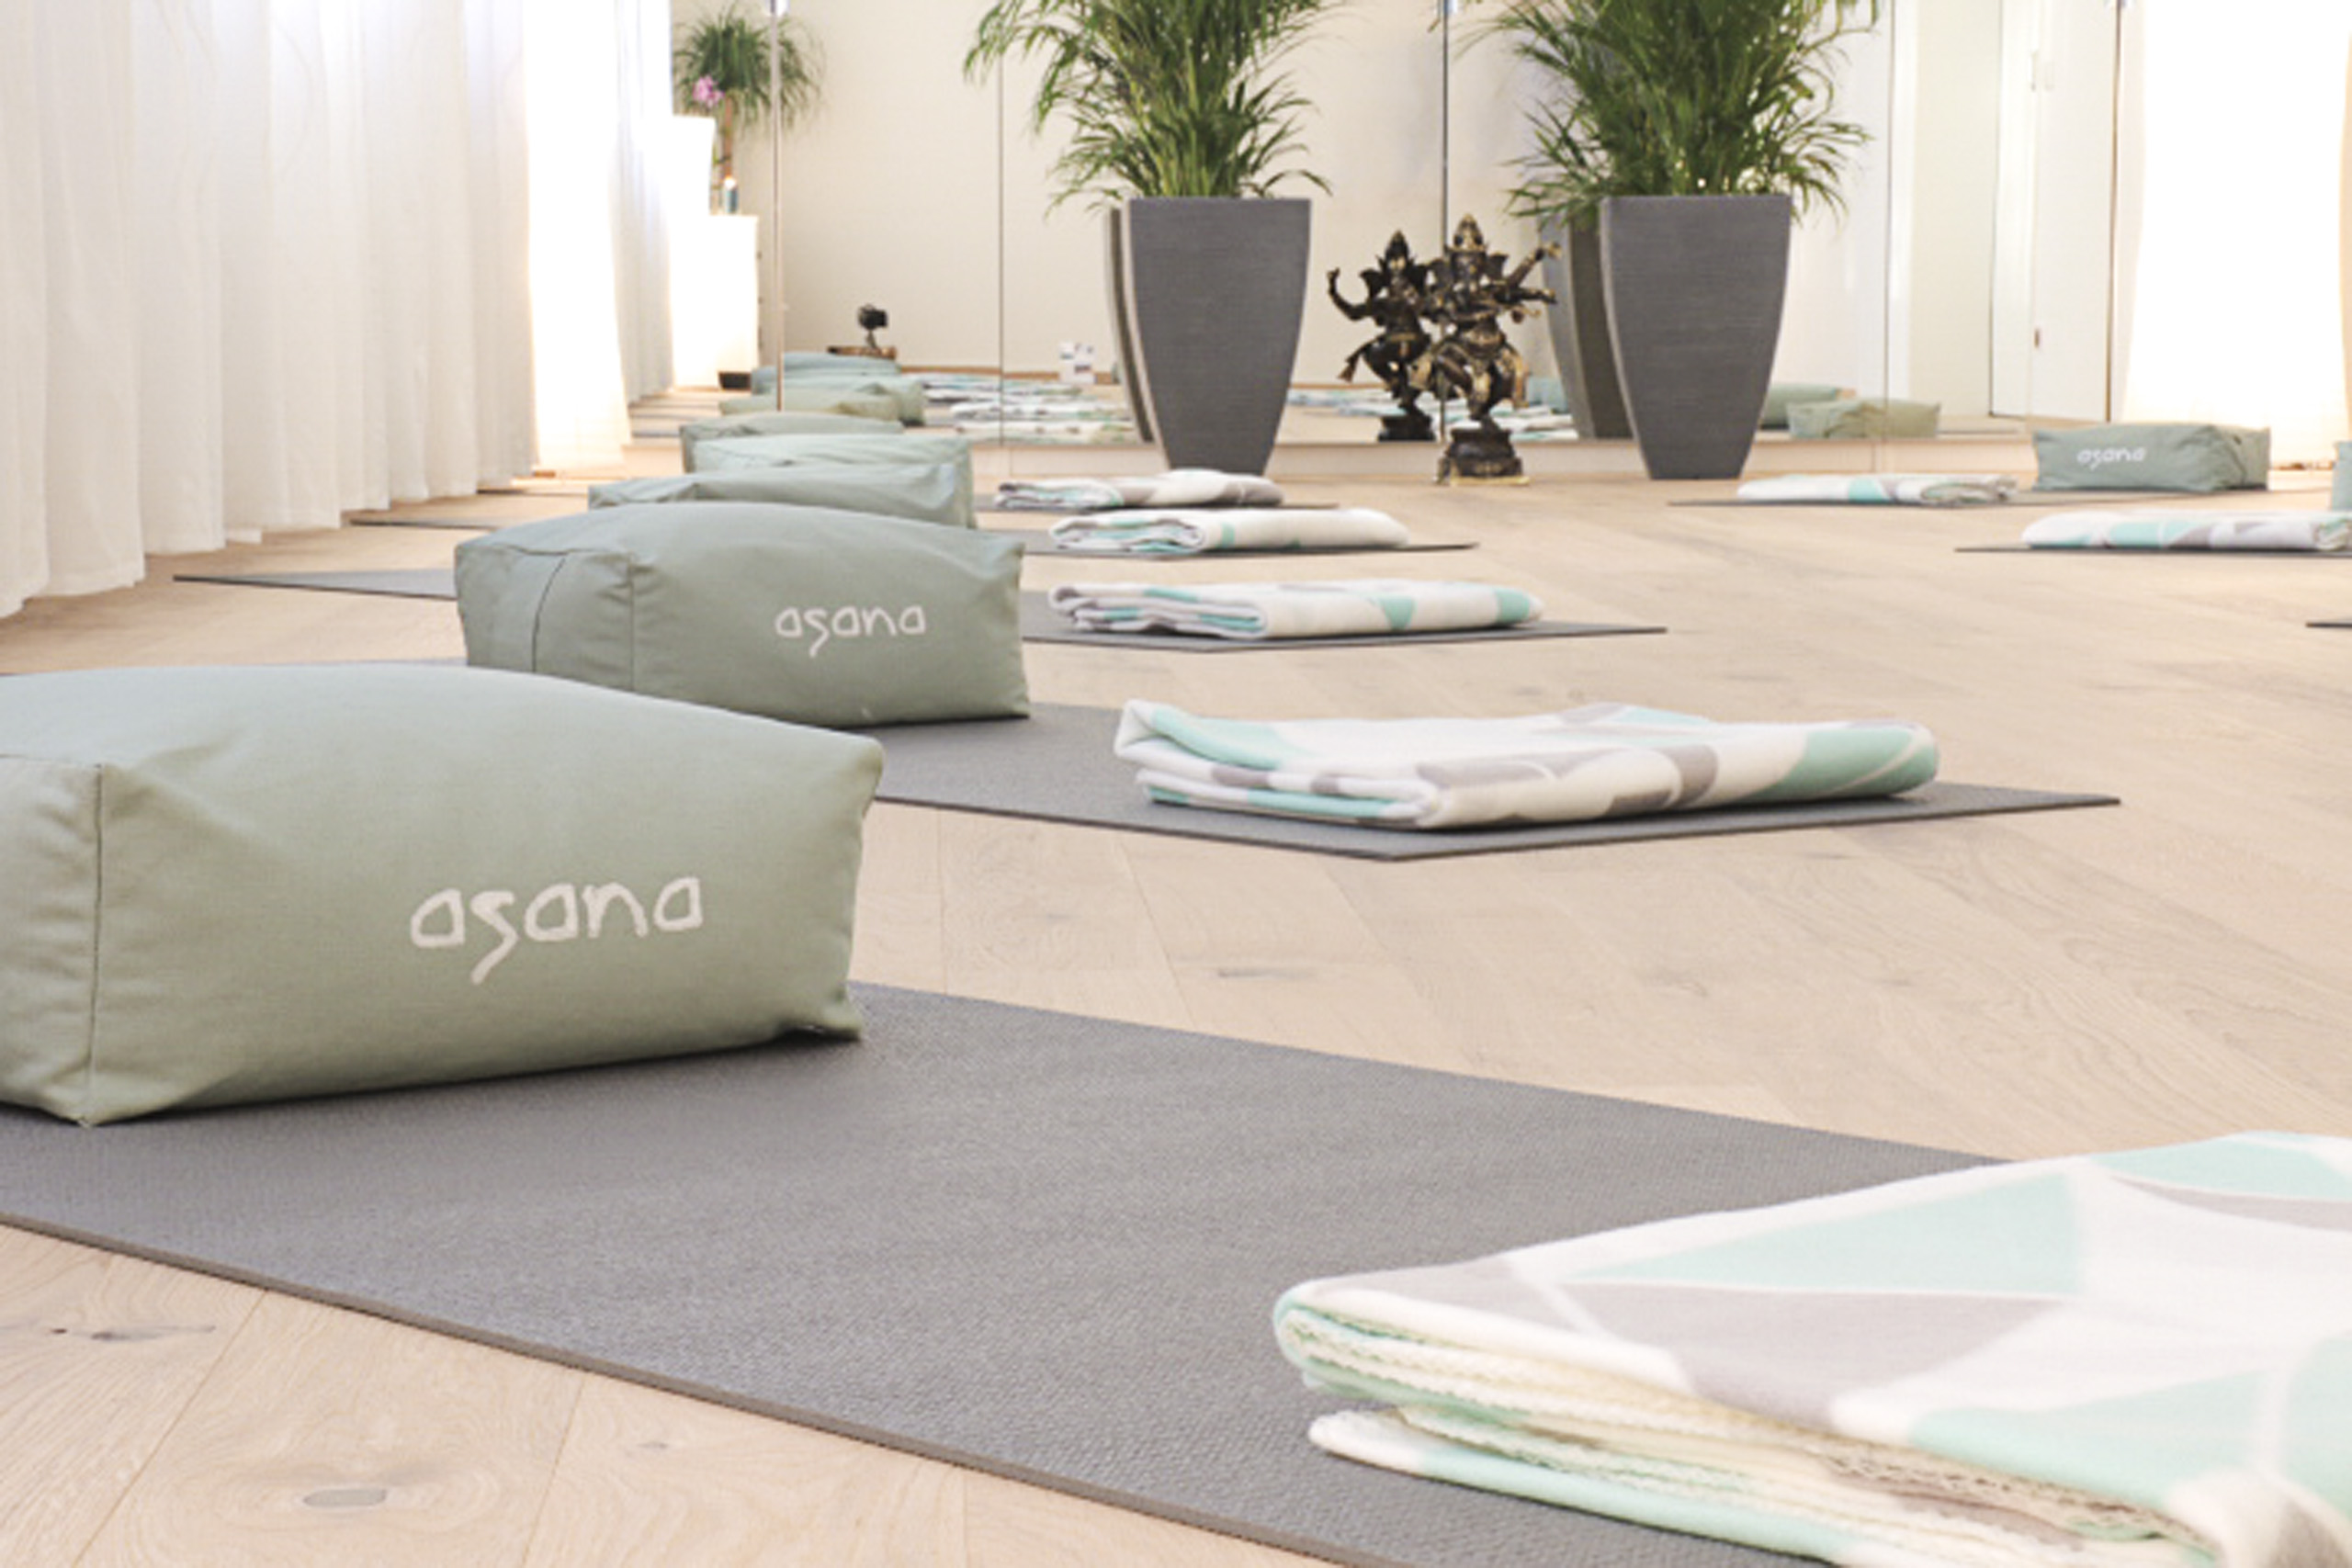 Asana Yoga Studio 1230 Wien - Gemütliche Atmosphäre